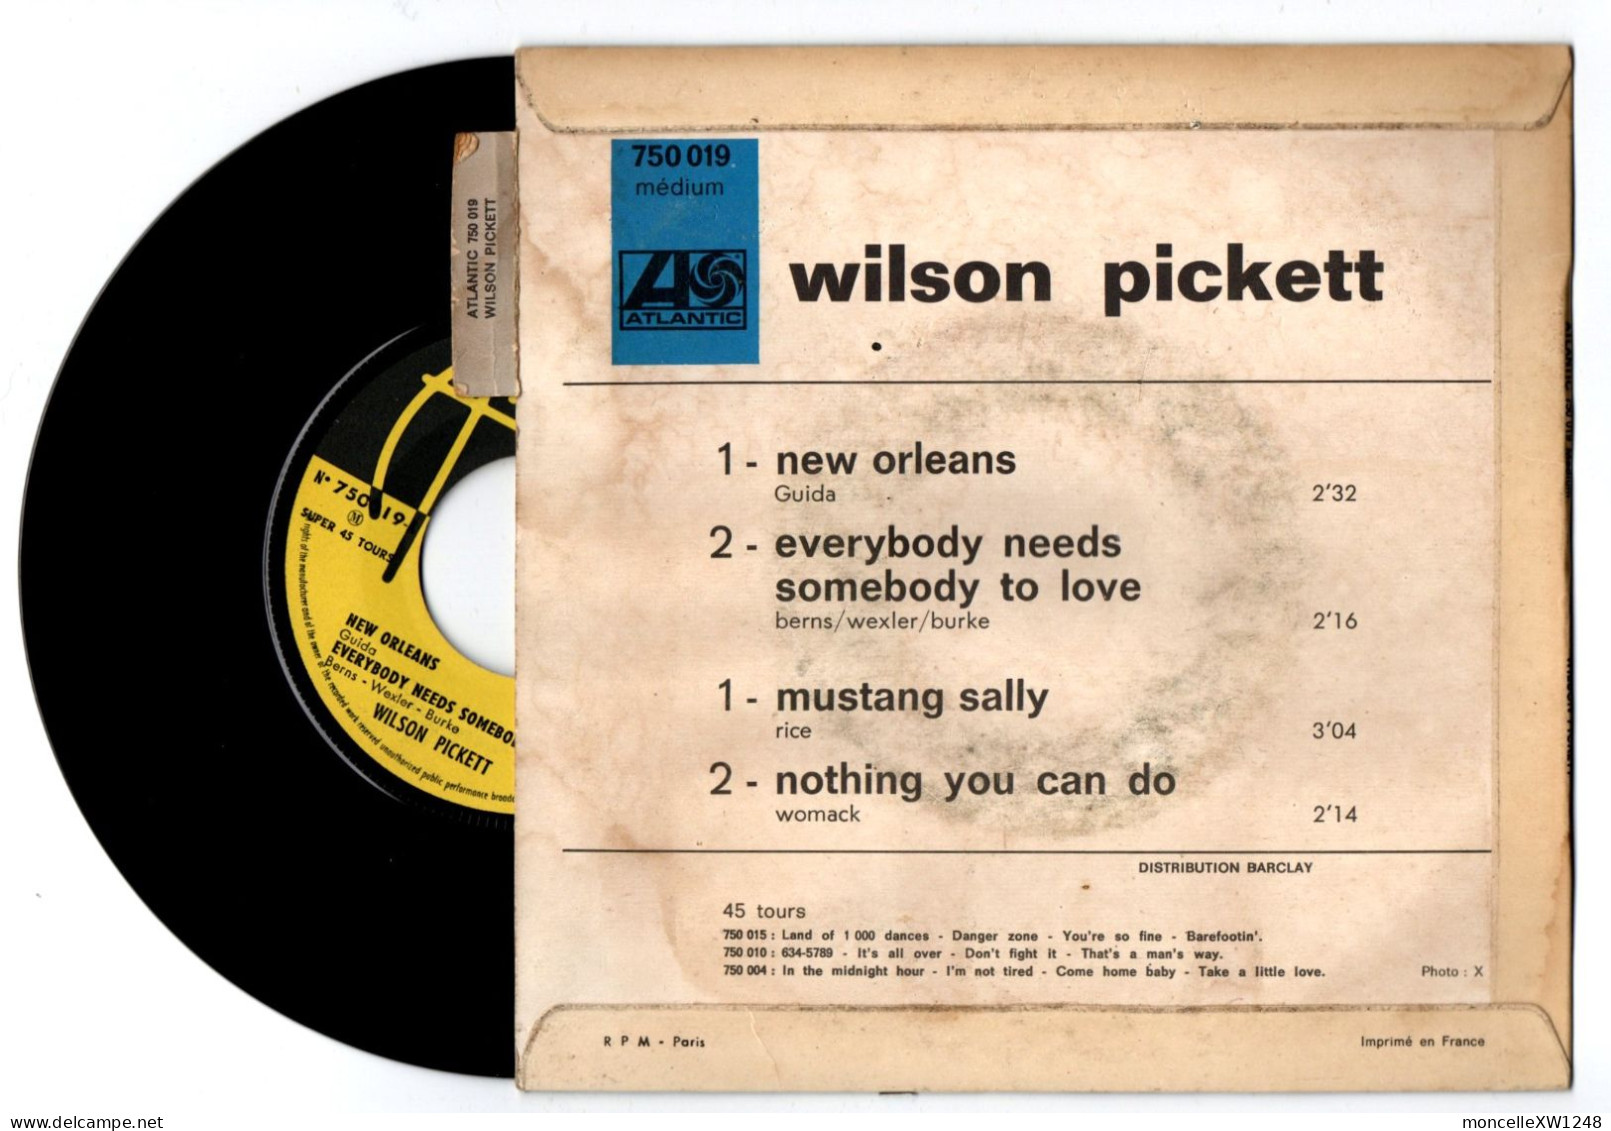 Wilson Pickett - 45 T EP Everybody Needs Somebody To Love (1967) - 45 T - Maxi-Single